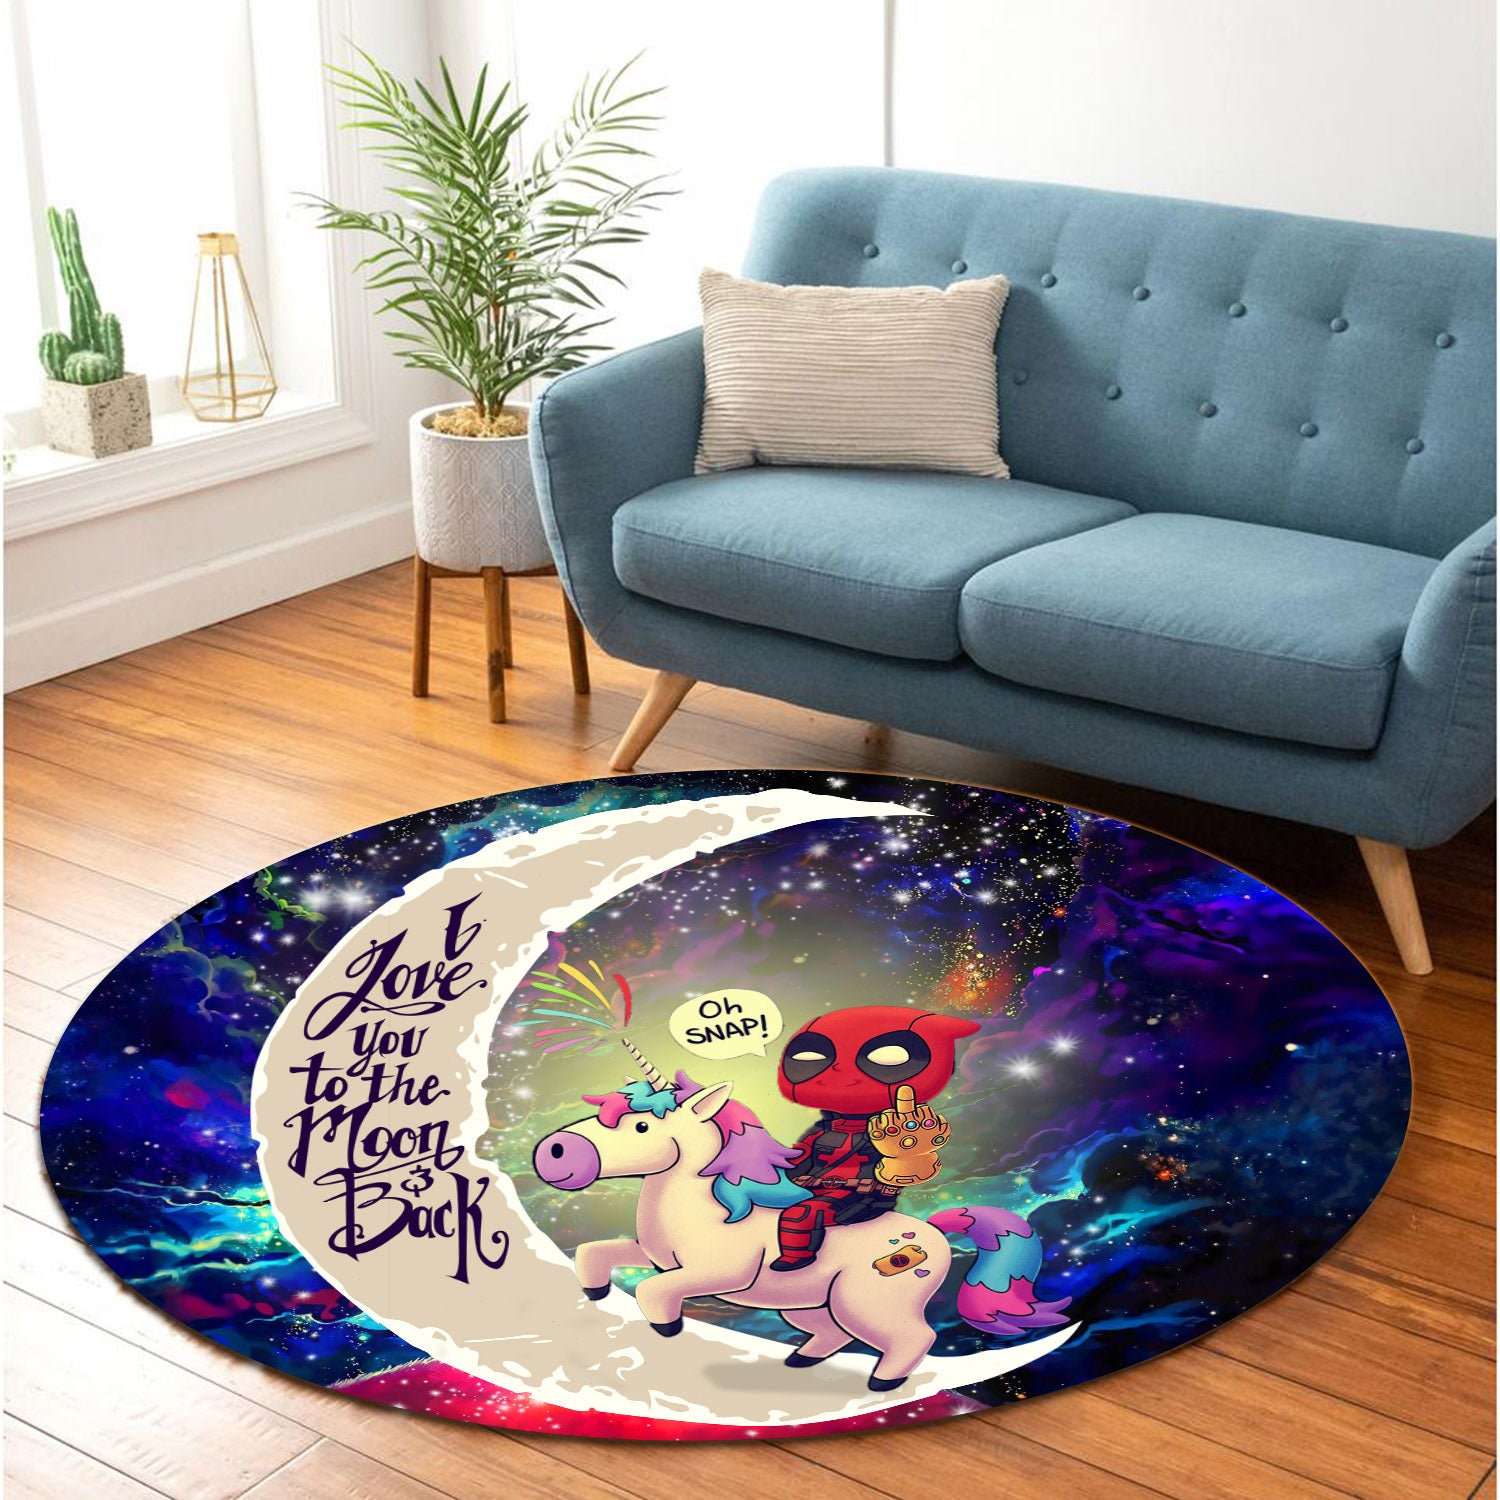 Deadpool Unicorn Love You To The Moon Galaxy Round Carpet Rug Bedroom Livingroom Home Decor Nearkii